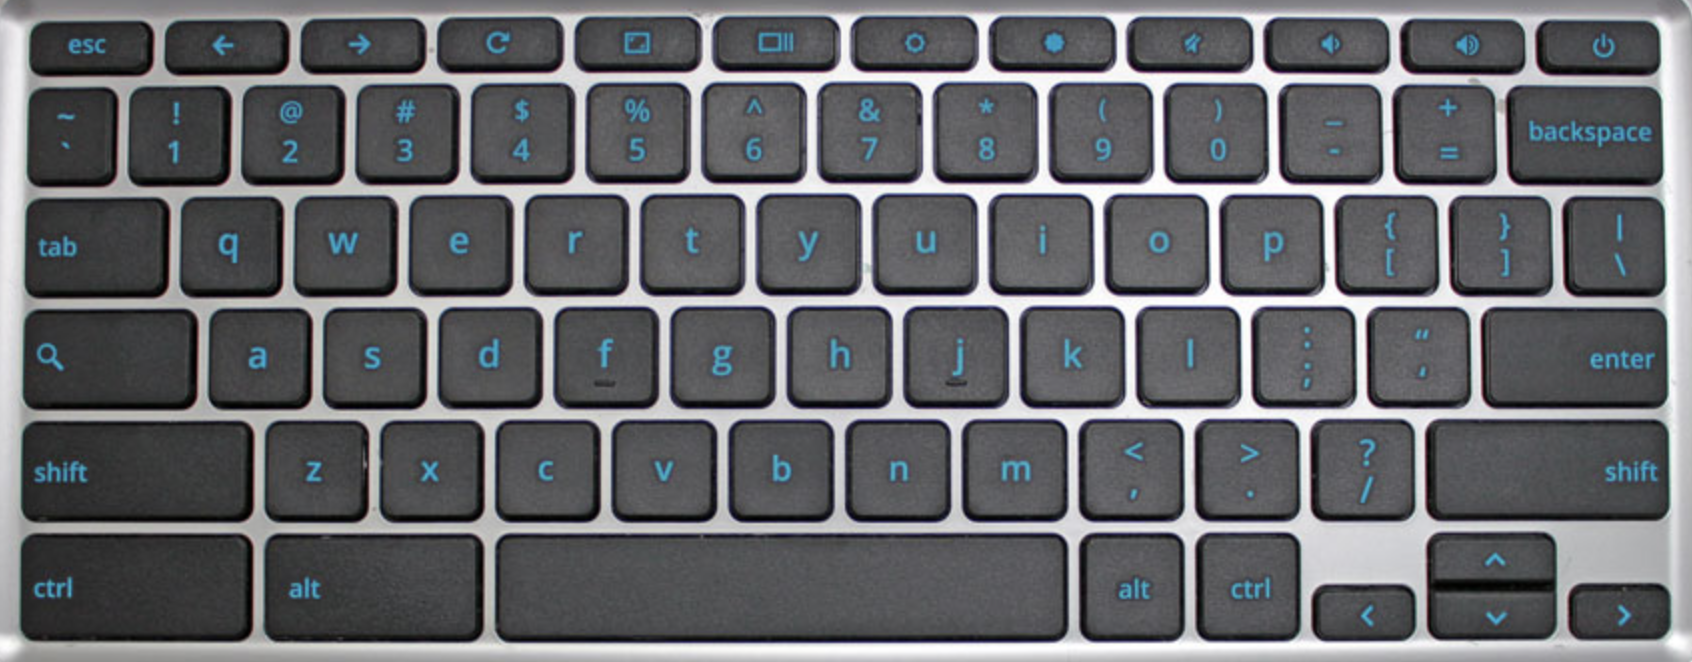 asus-C202s-keyboard-keys-replacement.jpg